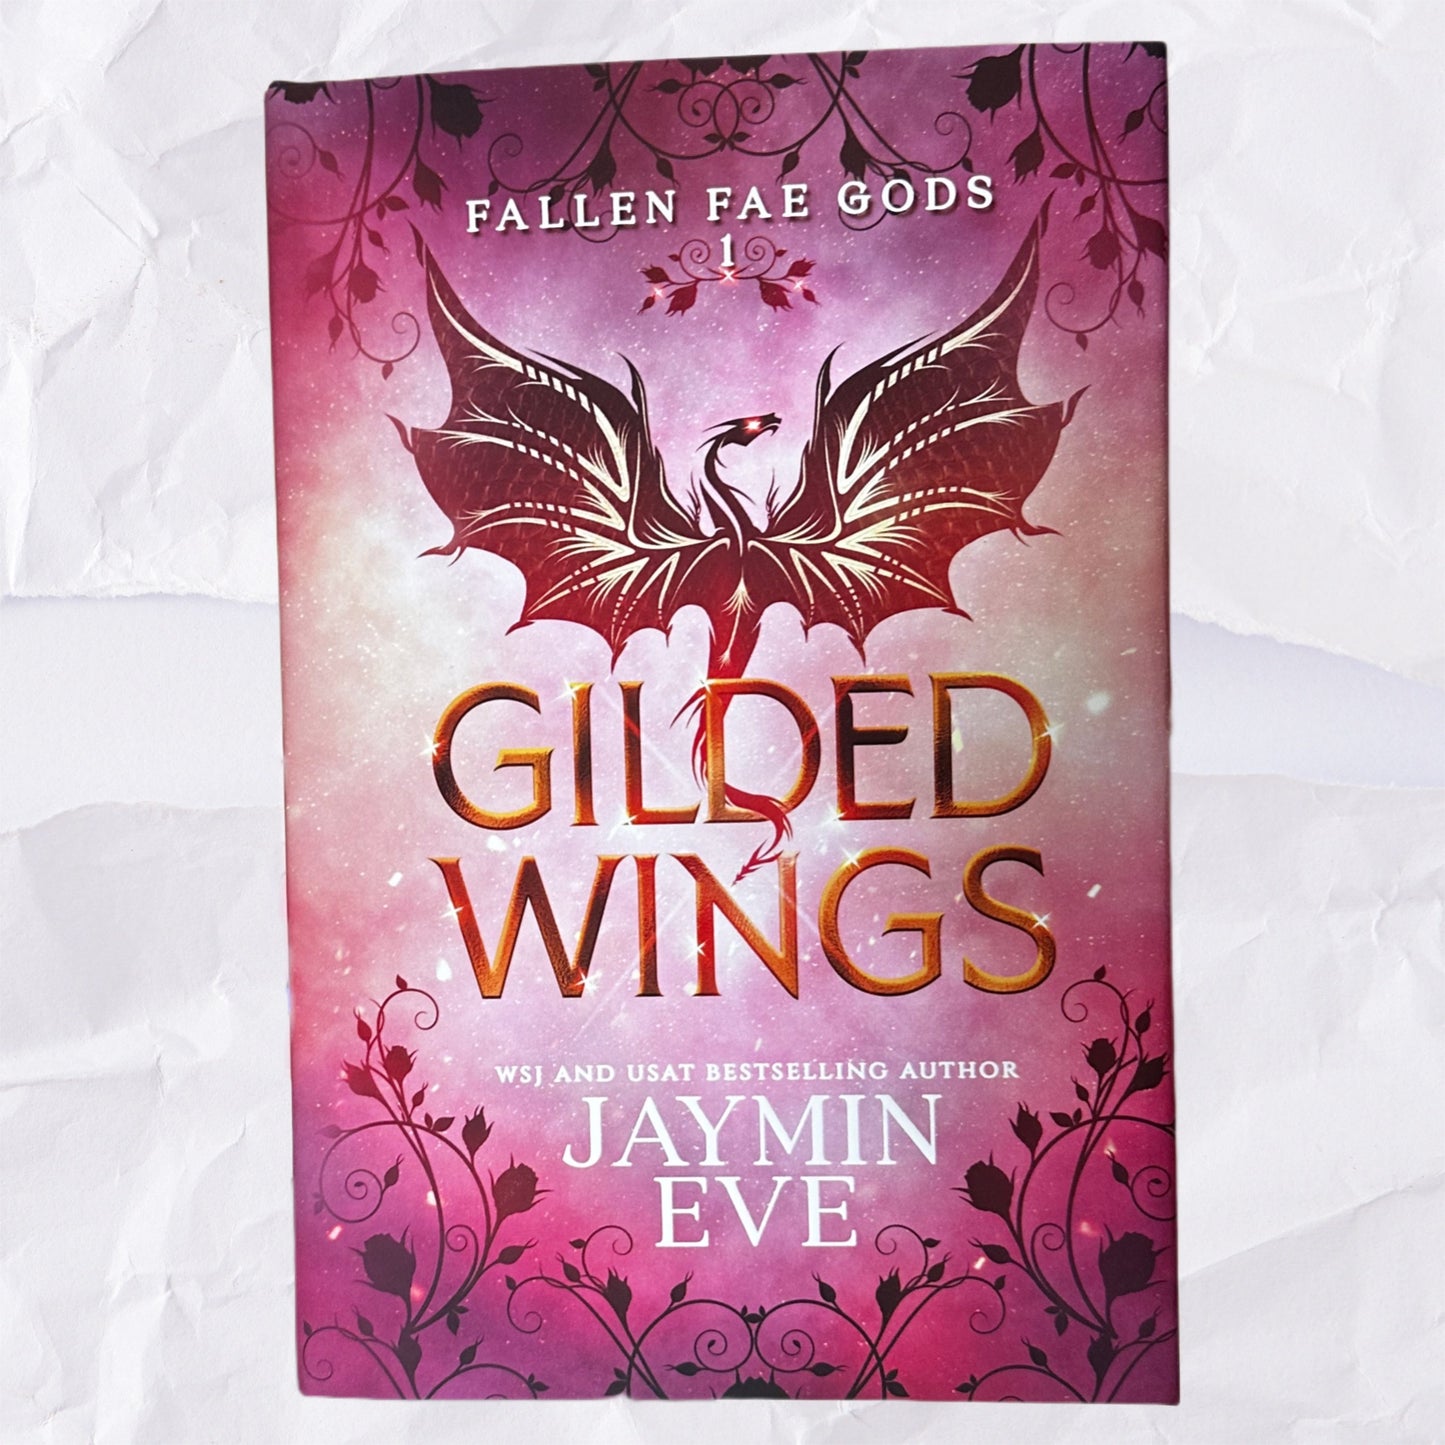 Gilded Wings (Fallen Fae Gods #1) by Jaymin Eve - Hardcover